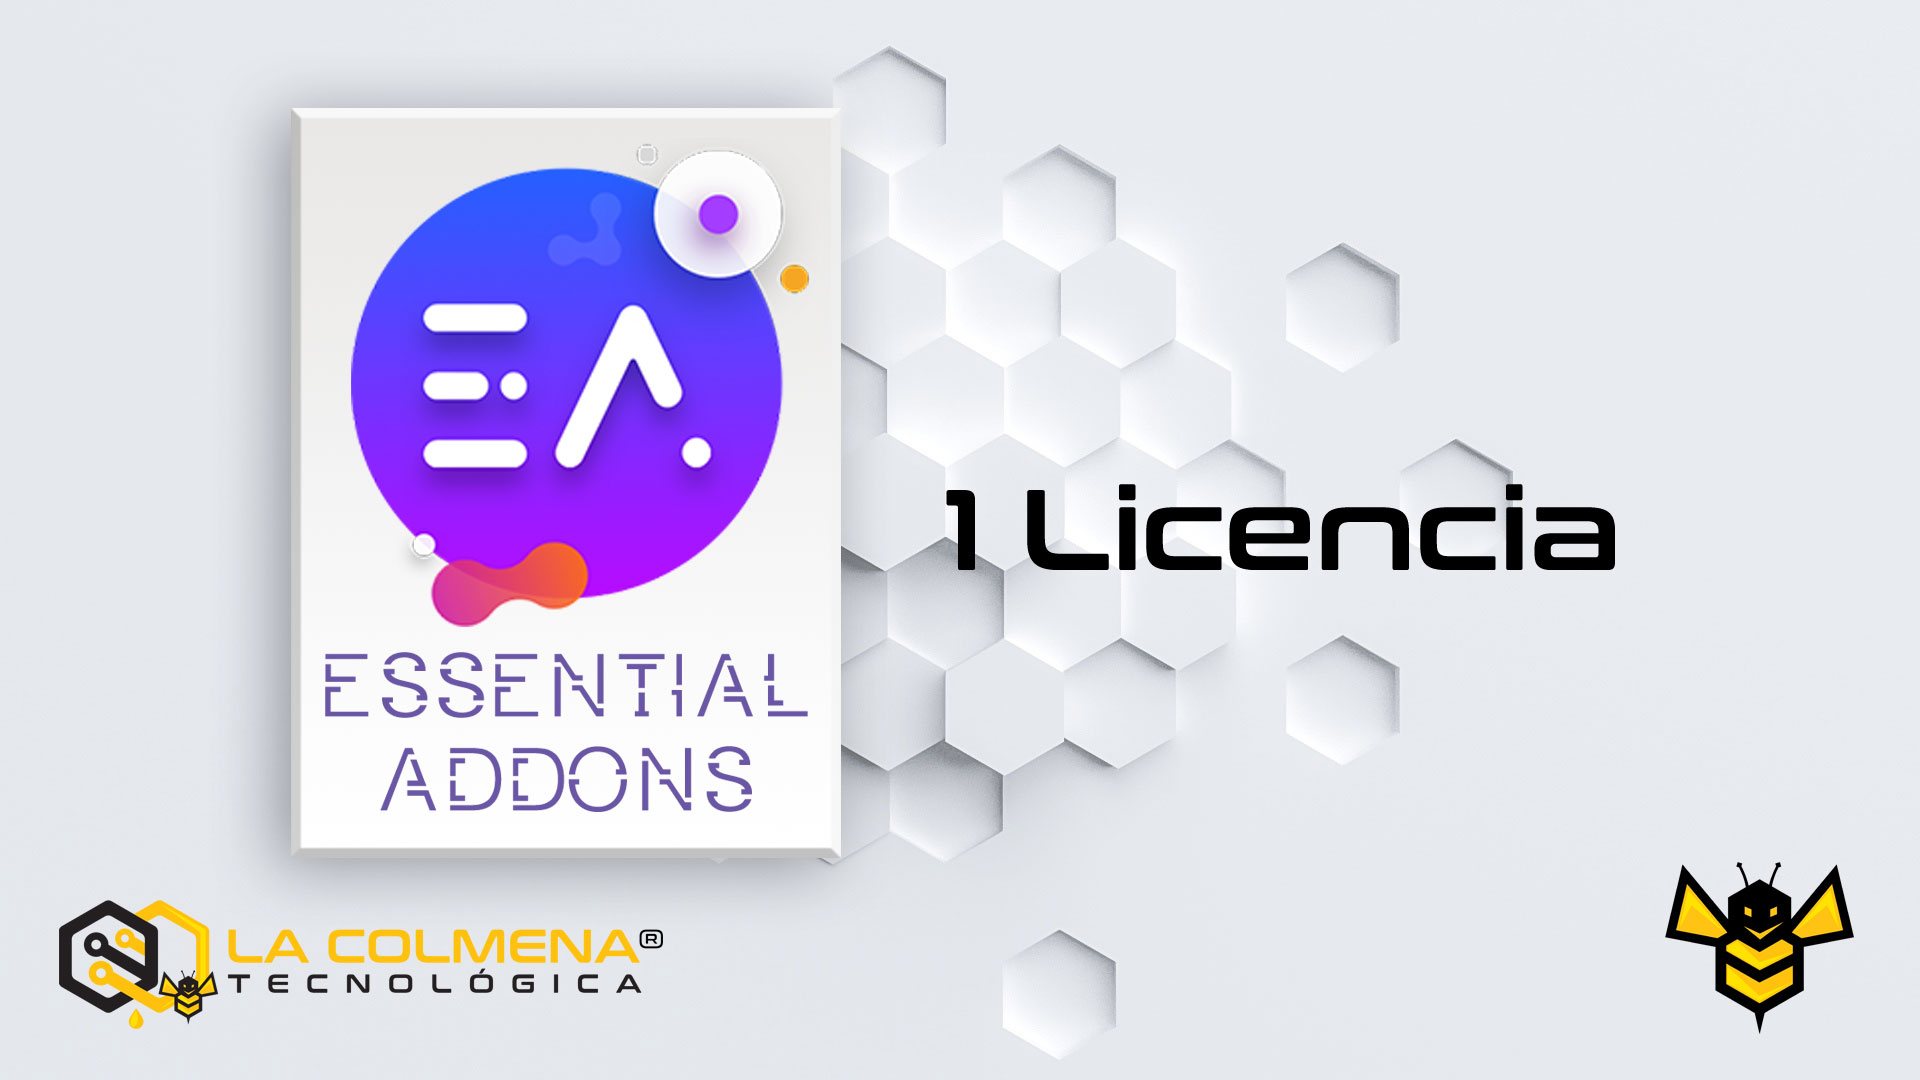 1 Licencia de Essential Addons for Elementor